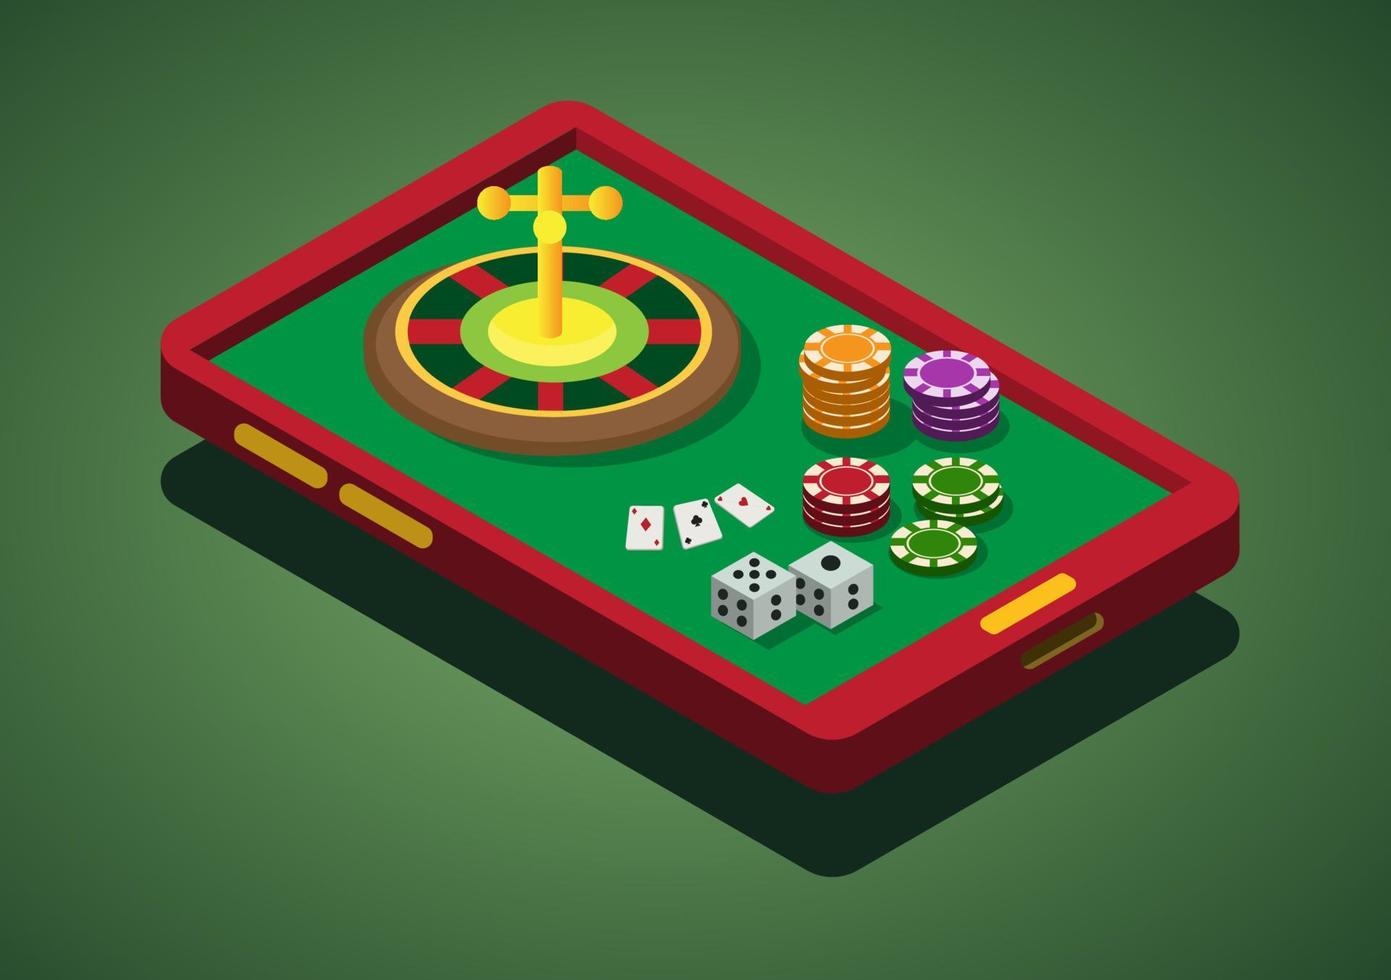 Casino-Spiel Online-Smartphone, Roulette, Wetten, Domino, Poker, Chips, Würfel isometrischer Illustrationsvektor vektor